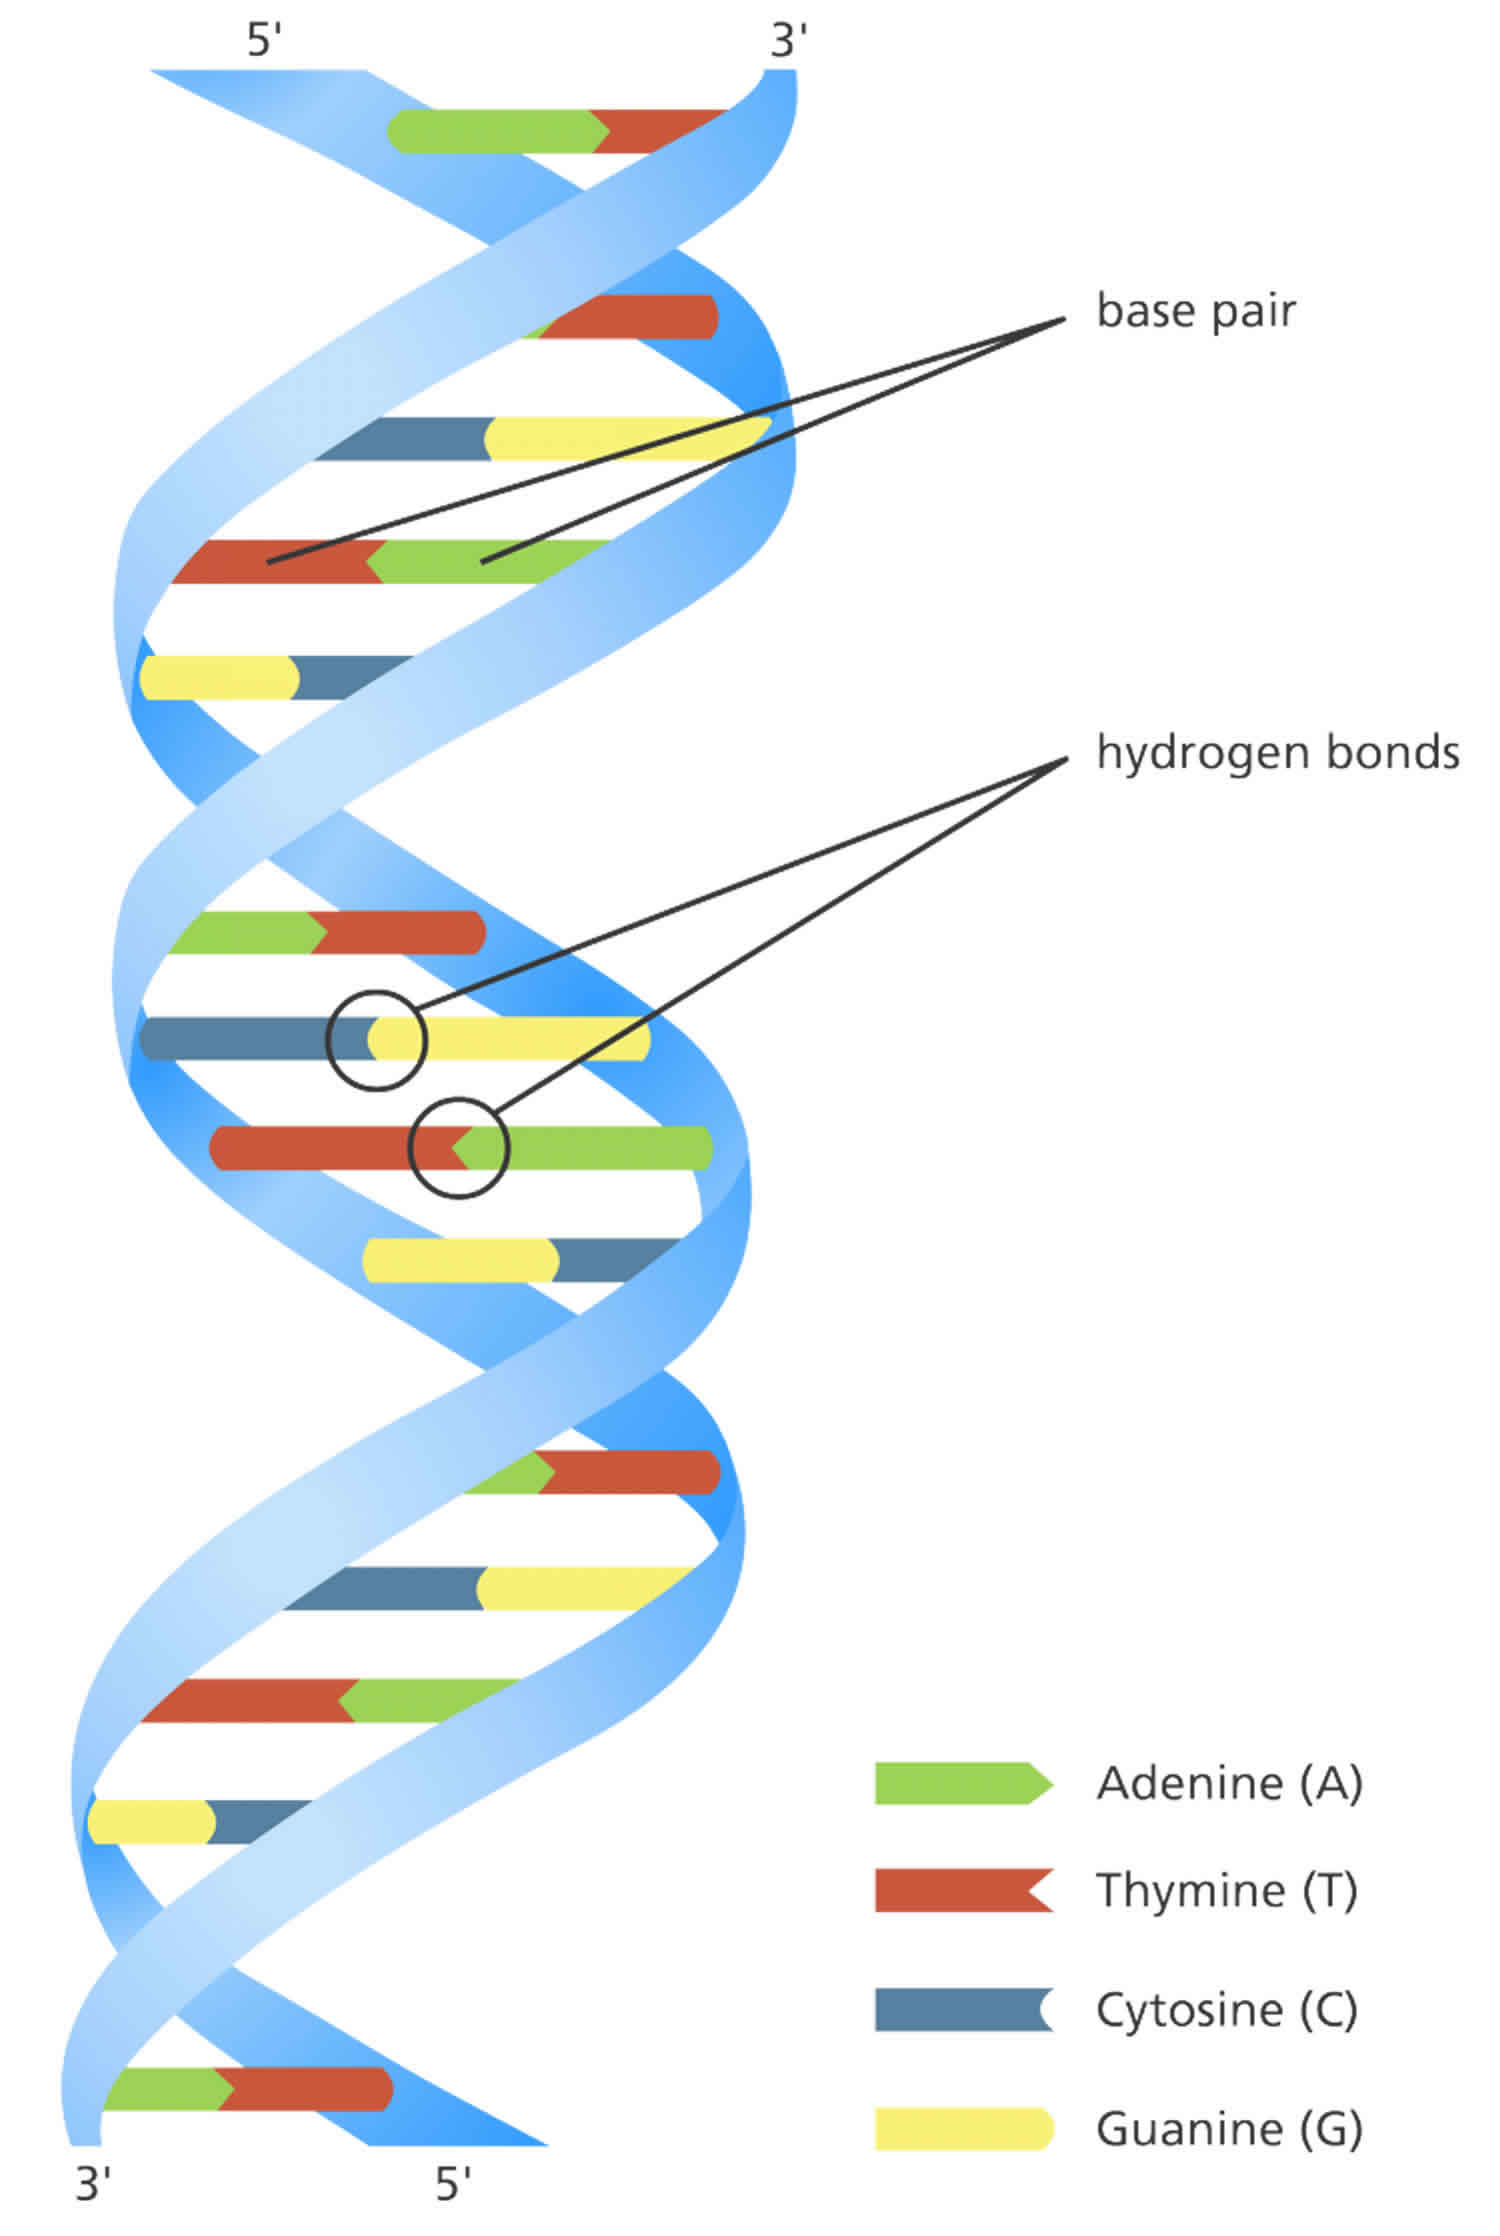 deoxyribonucleic acid structure